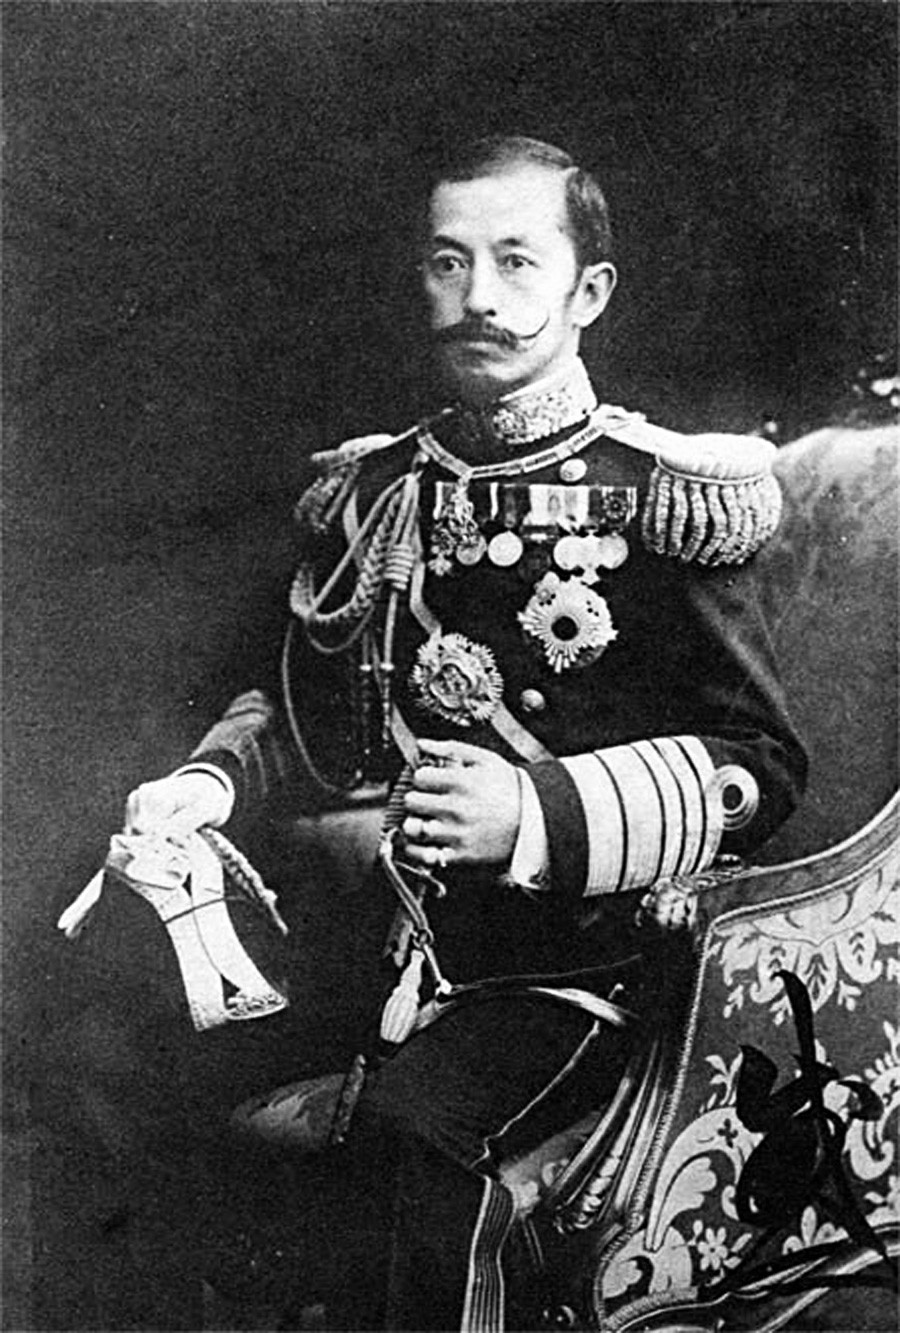 Japanese admiral Prince Arisugawa Takehito (1862-1913)